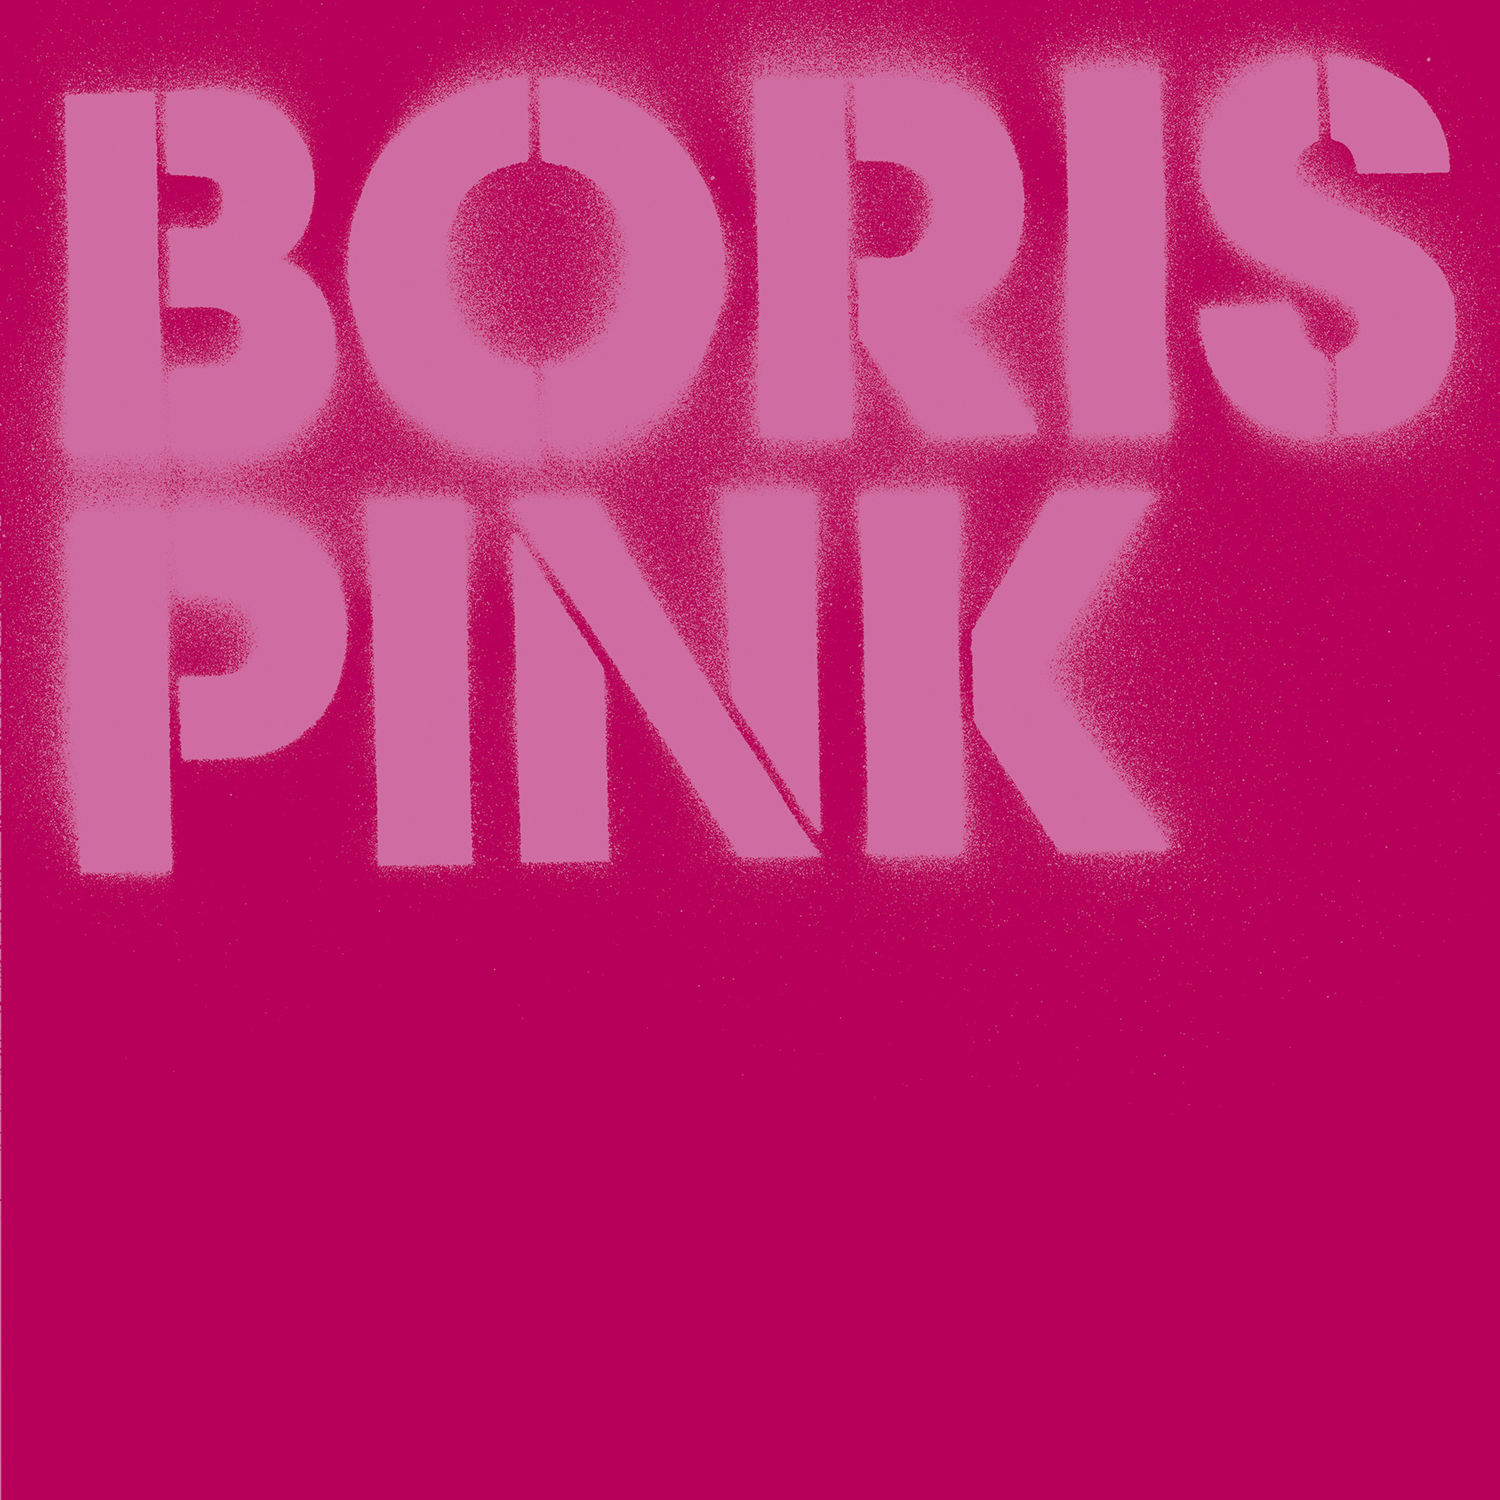 Boris 'PINK'